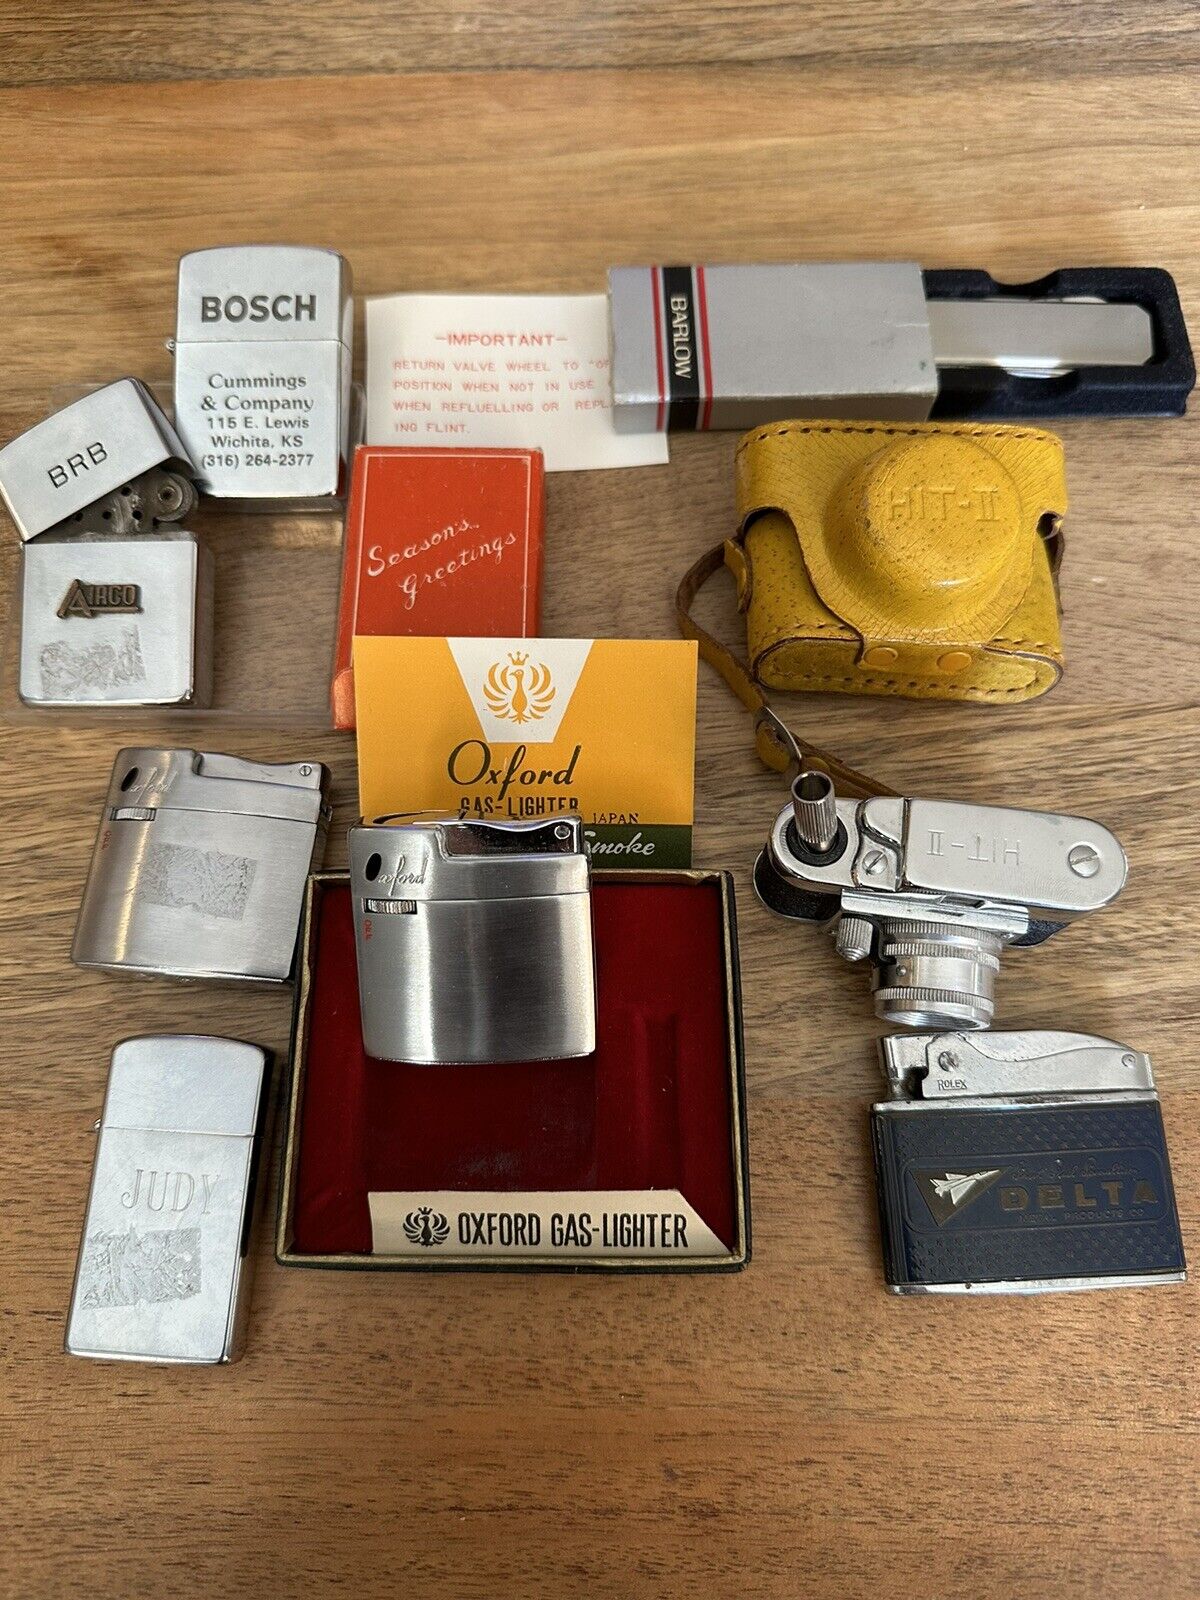 Vintage Rolex Delta , Bosch, Airco Lighter Lot And Mini Spy Camera